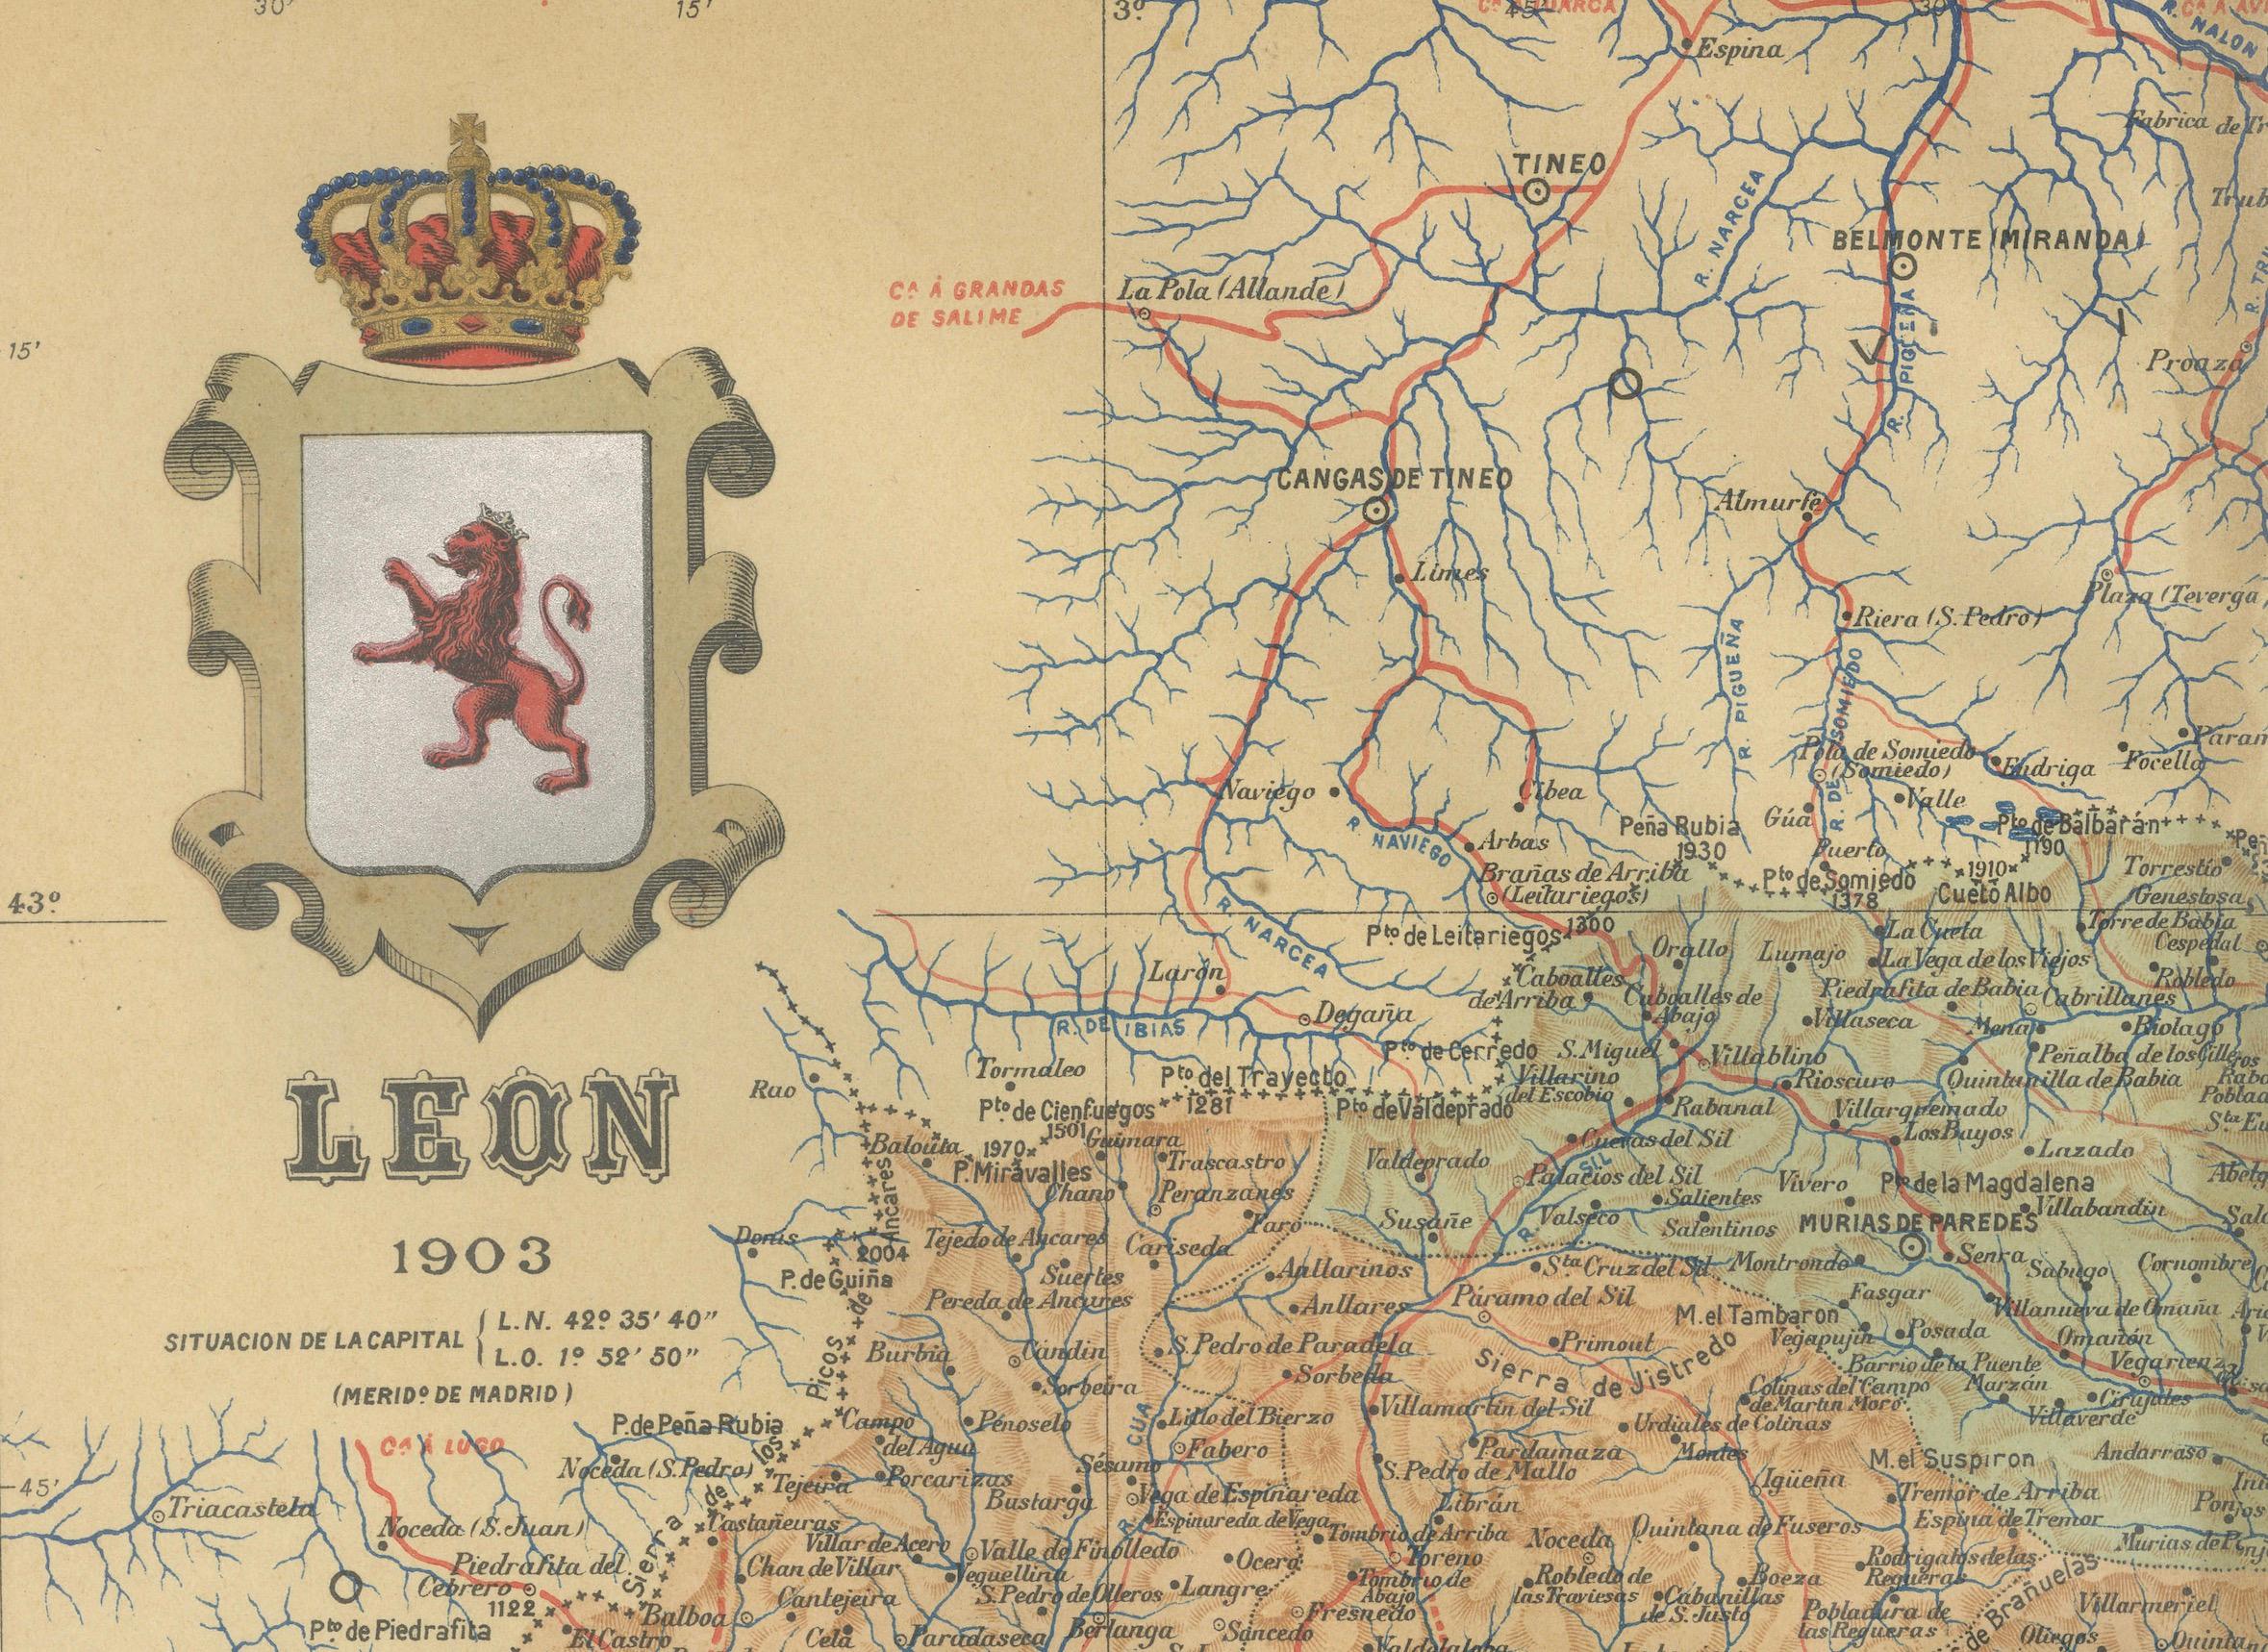 León 1903: A Cartographic Detailing of Castilla y León's Mountainous Province For Sale 1